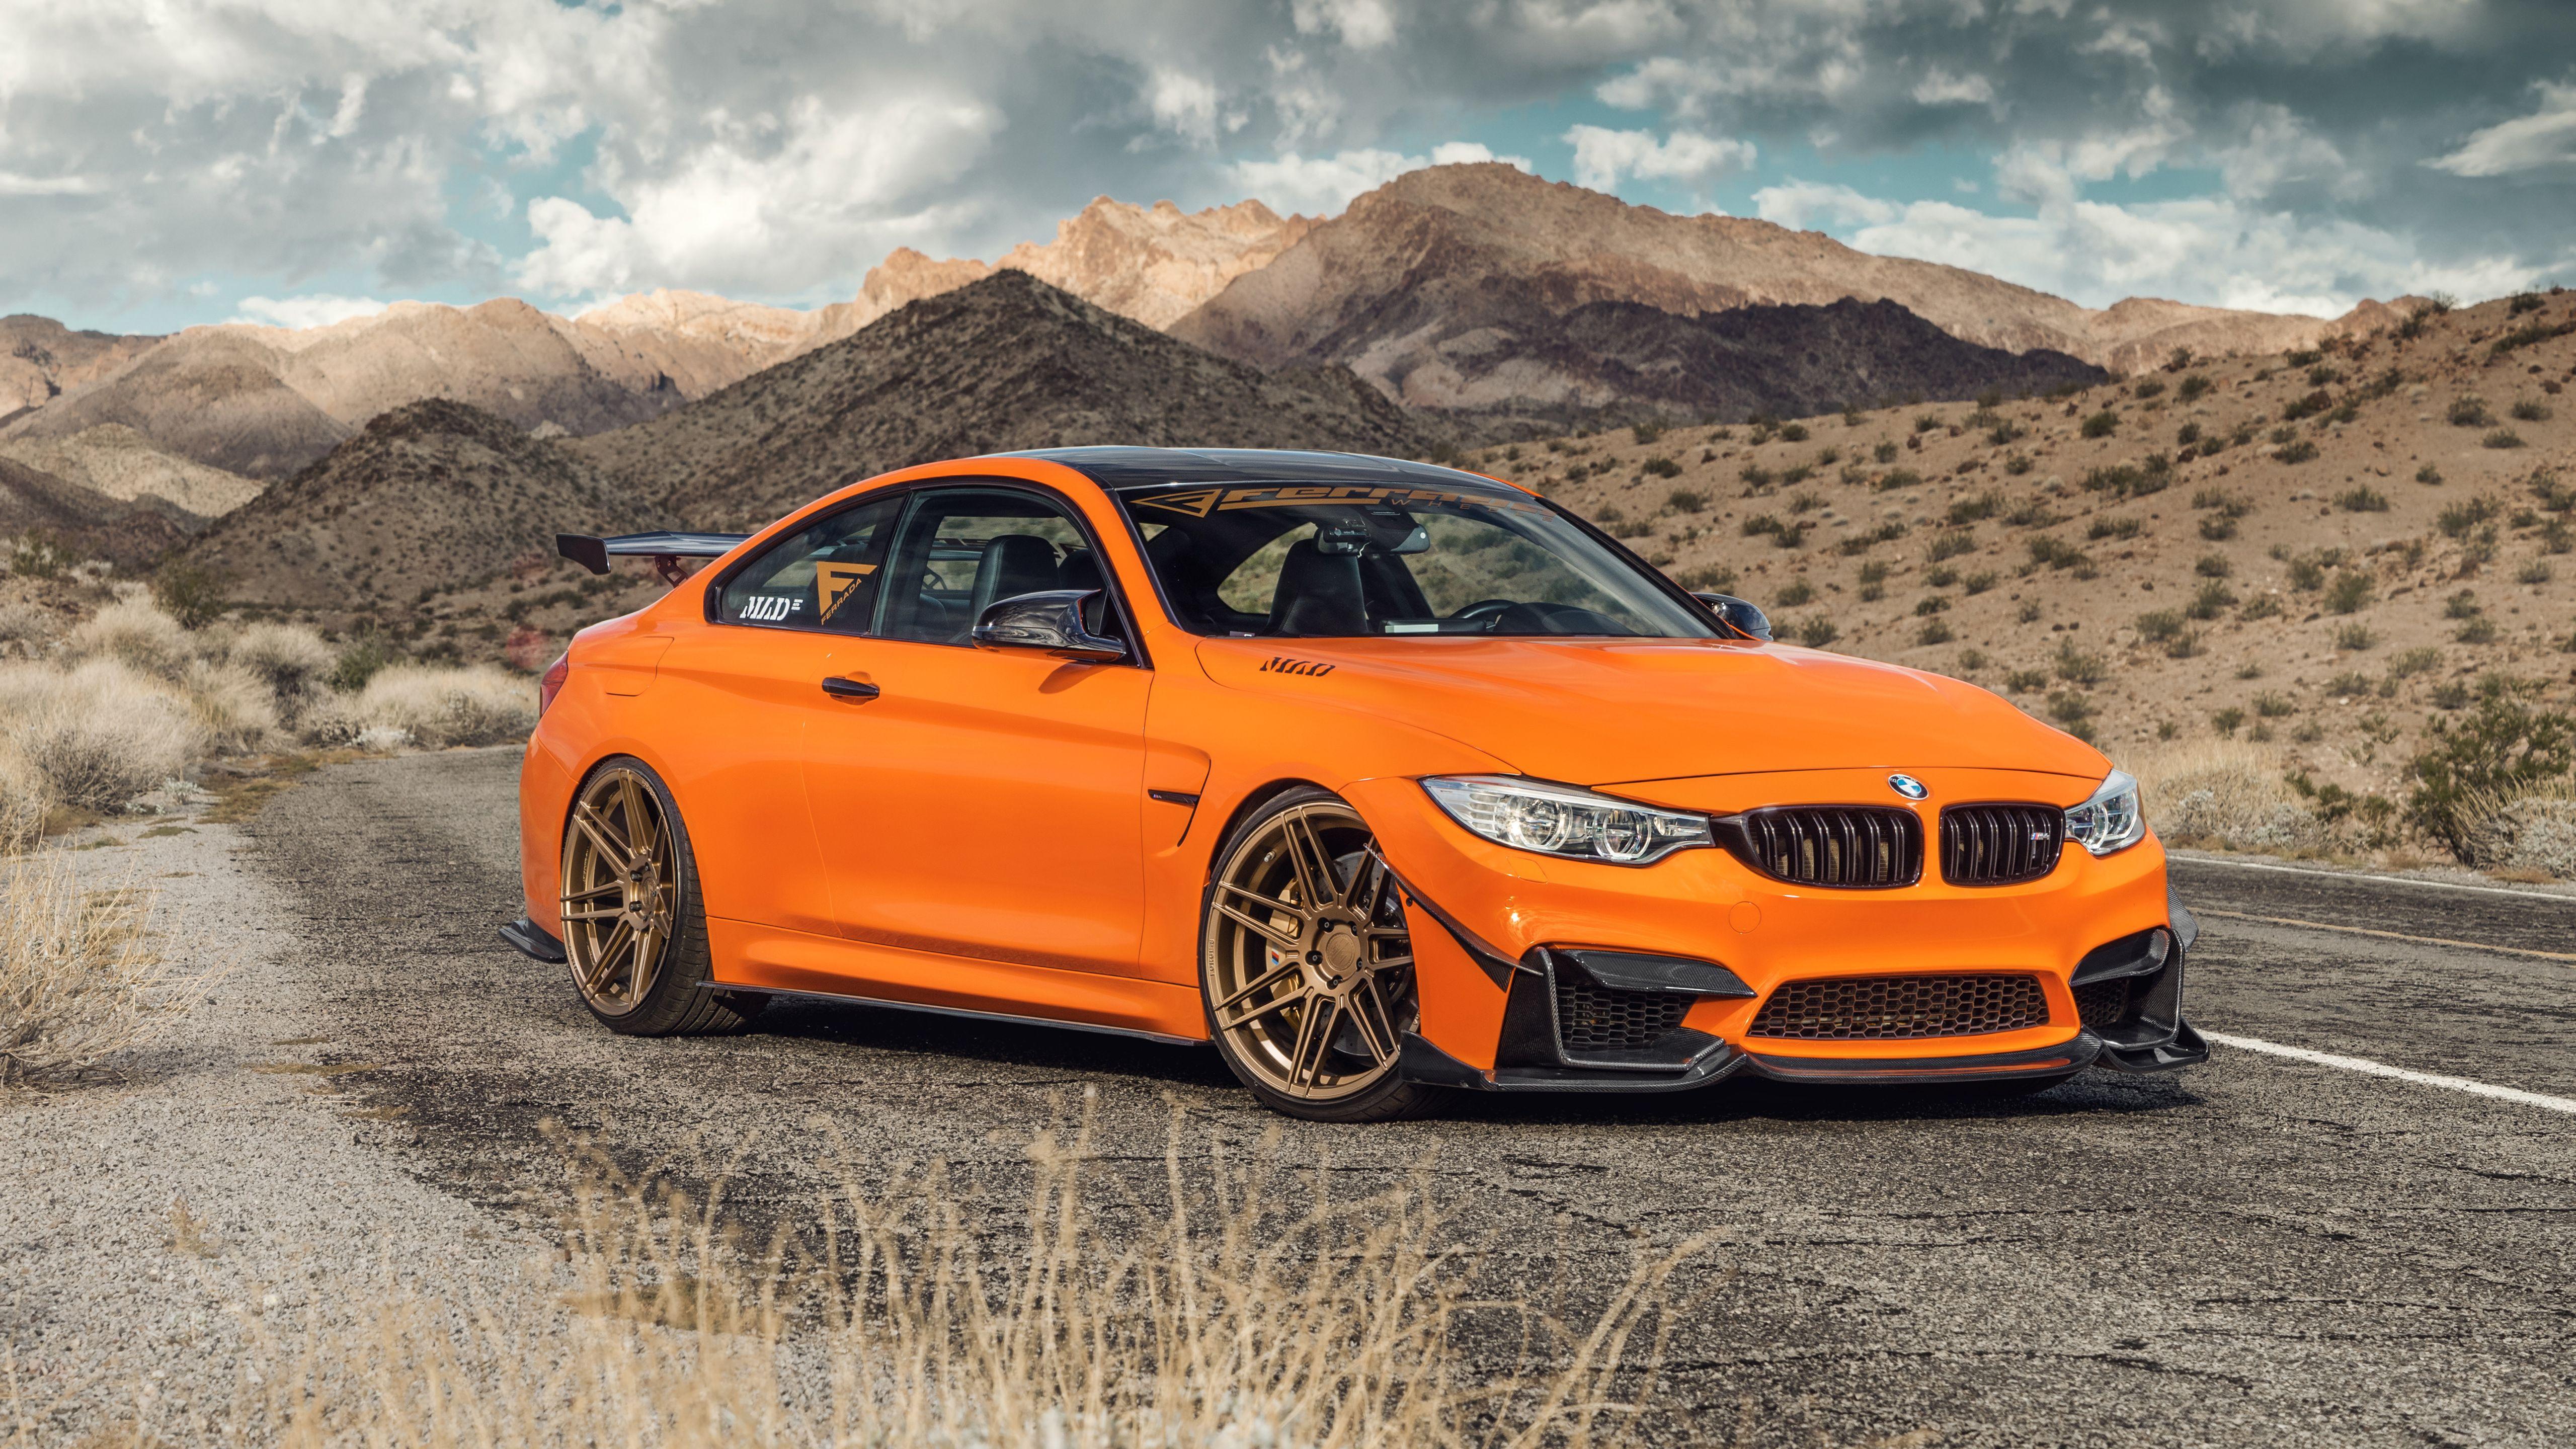 Orange BMW Wallpapers - Top Free Orange BMW Backgrounds - WallpaperAccess